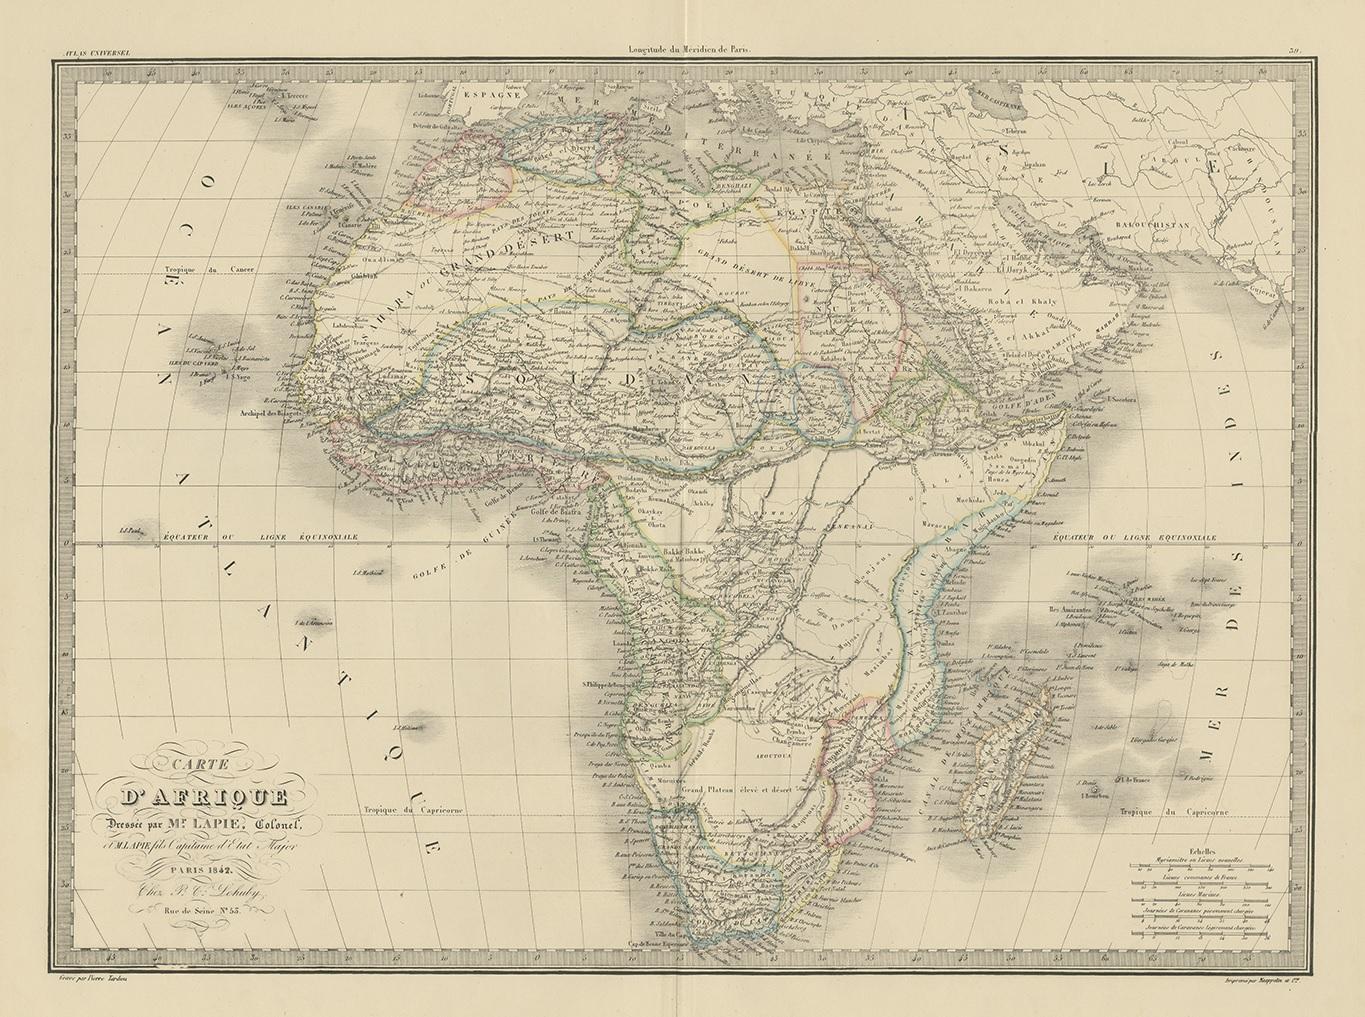 Antique map titled 'Carte d'Afrique'. Map of Africa. This map originates from 'Atlas universel de géographie ancienne et moderne (..)' by Pierre M. Lapie and Alexandre E. Lapie. Pierre M. Lapie was a French cartographer and engraver. He was the